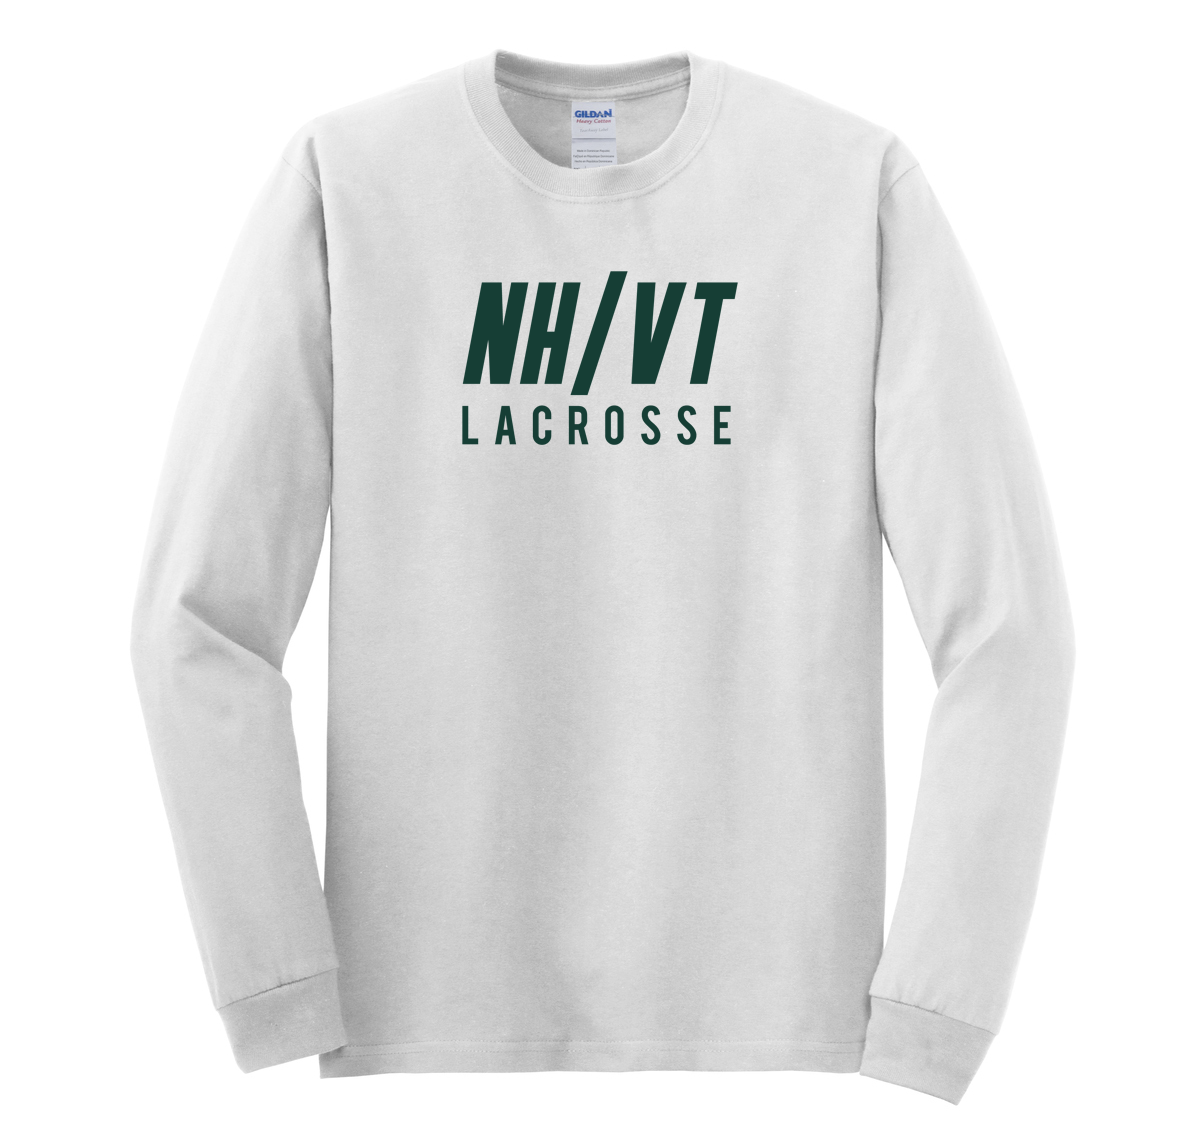 NH/VT Lacrosse Cotton Long Sleeve Shirt